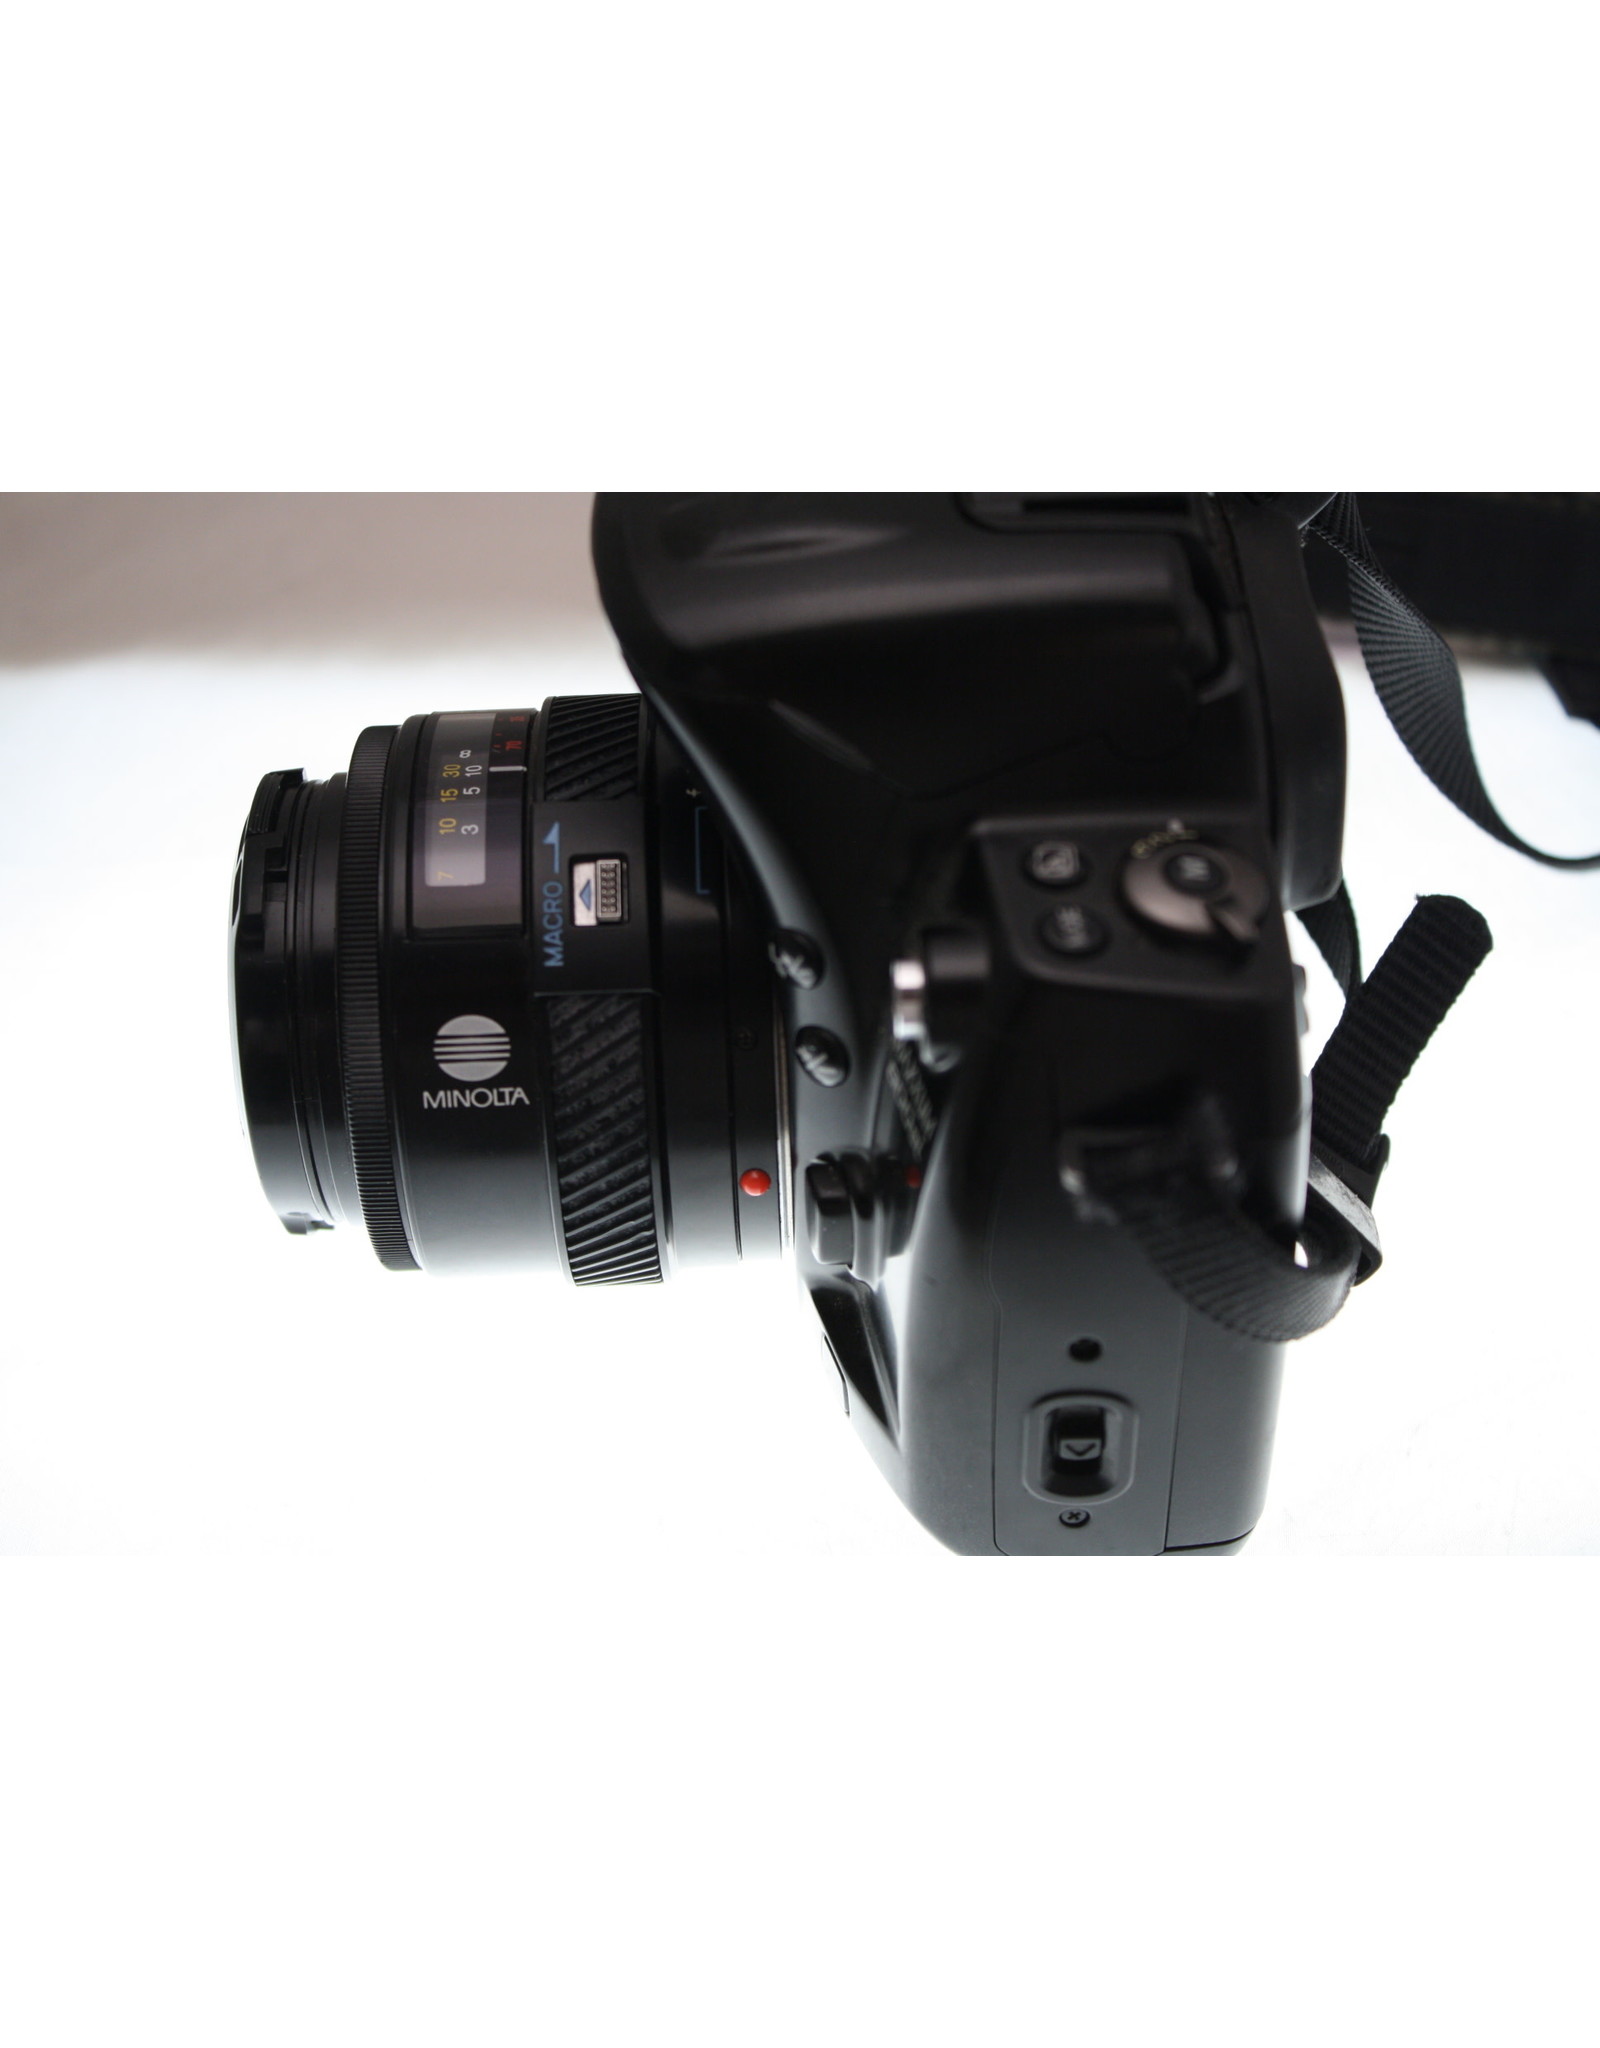 Minolta Maxxum 800si Film Camera W/ 35-70mm lens